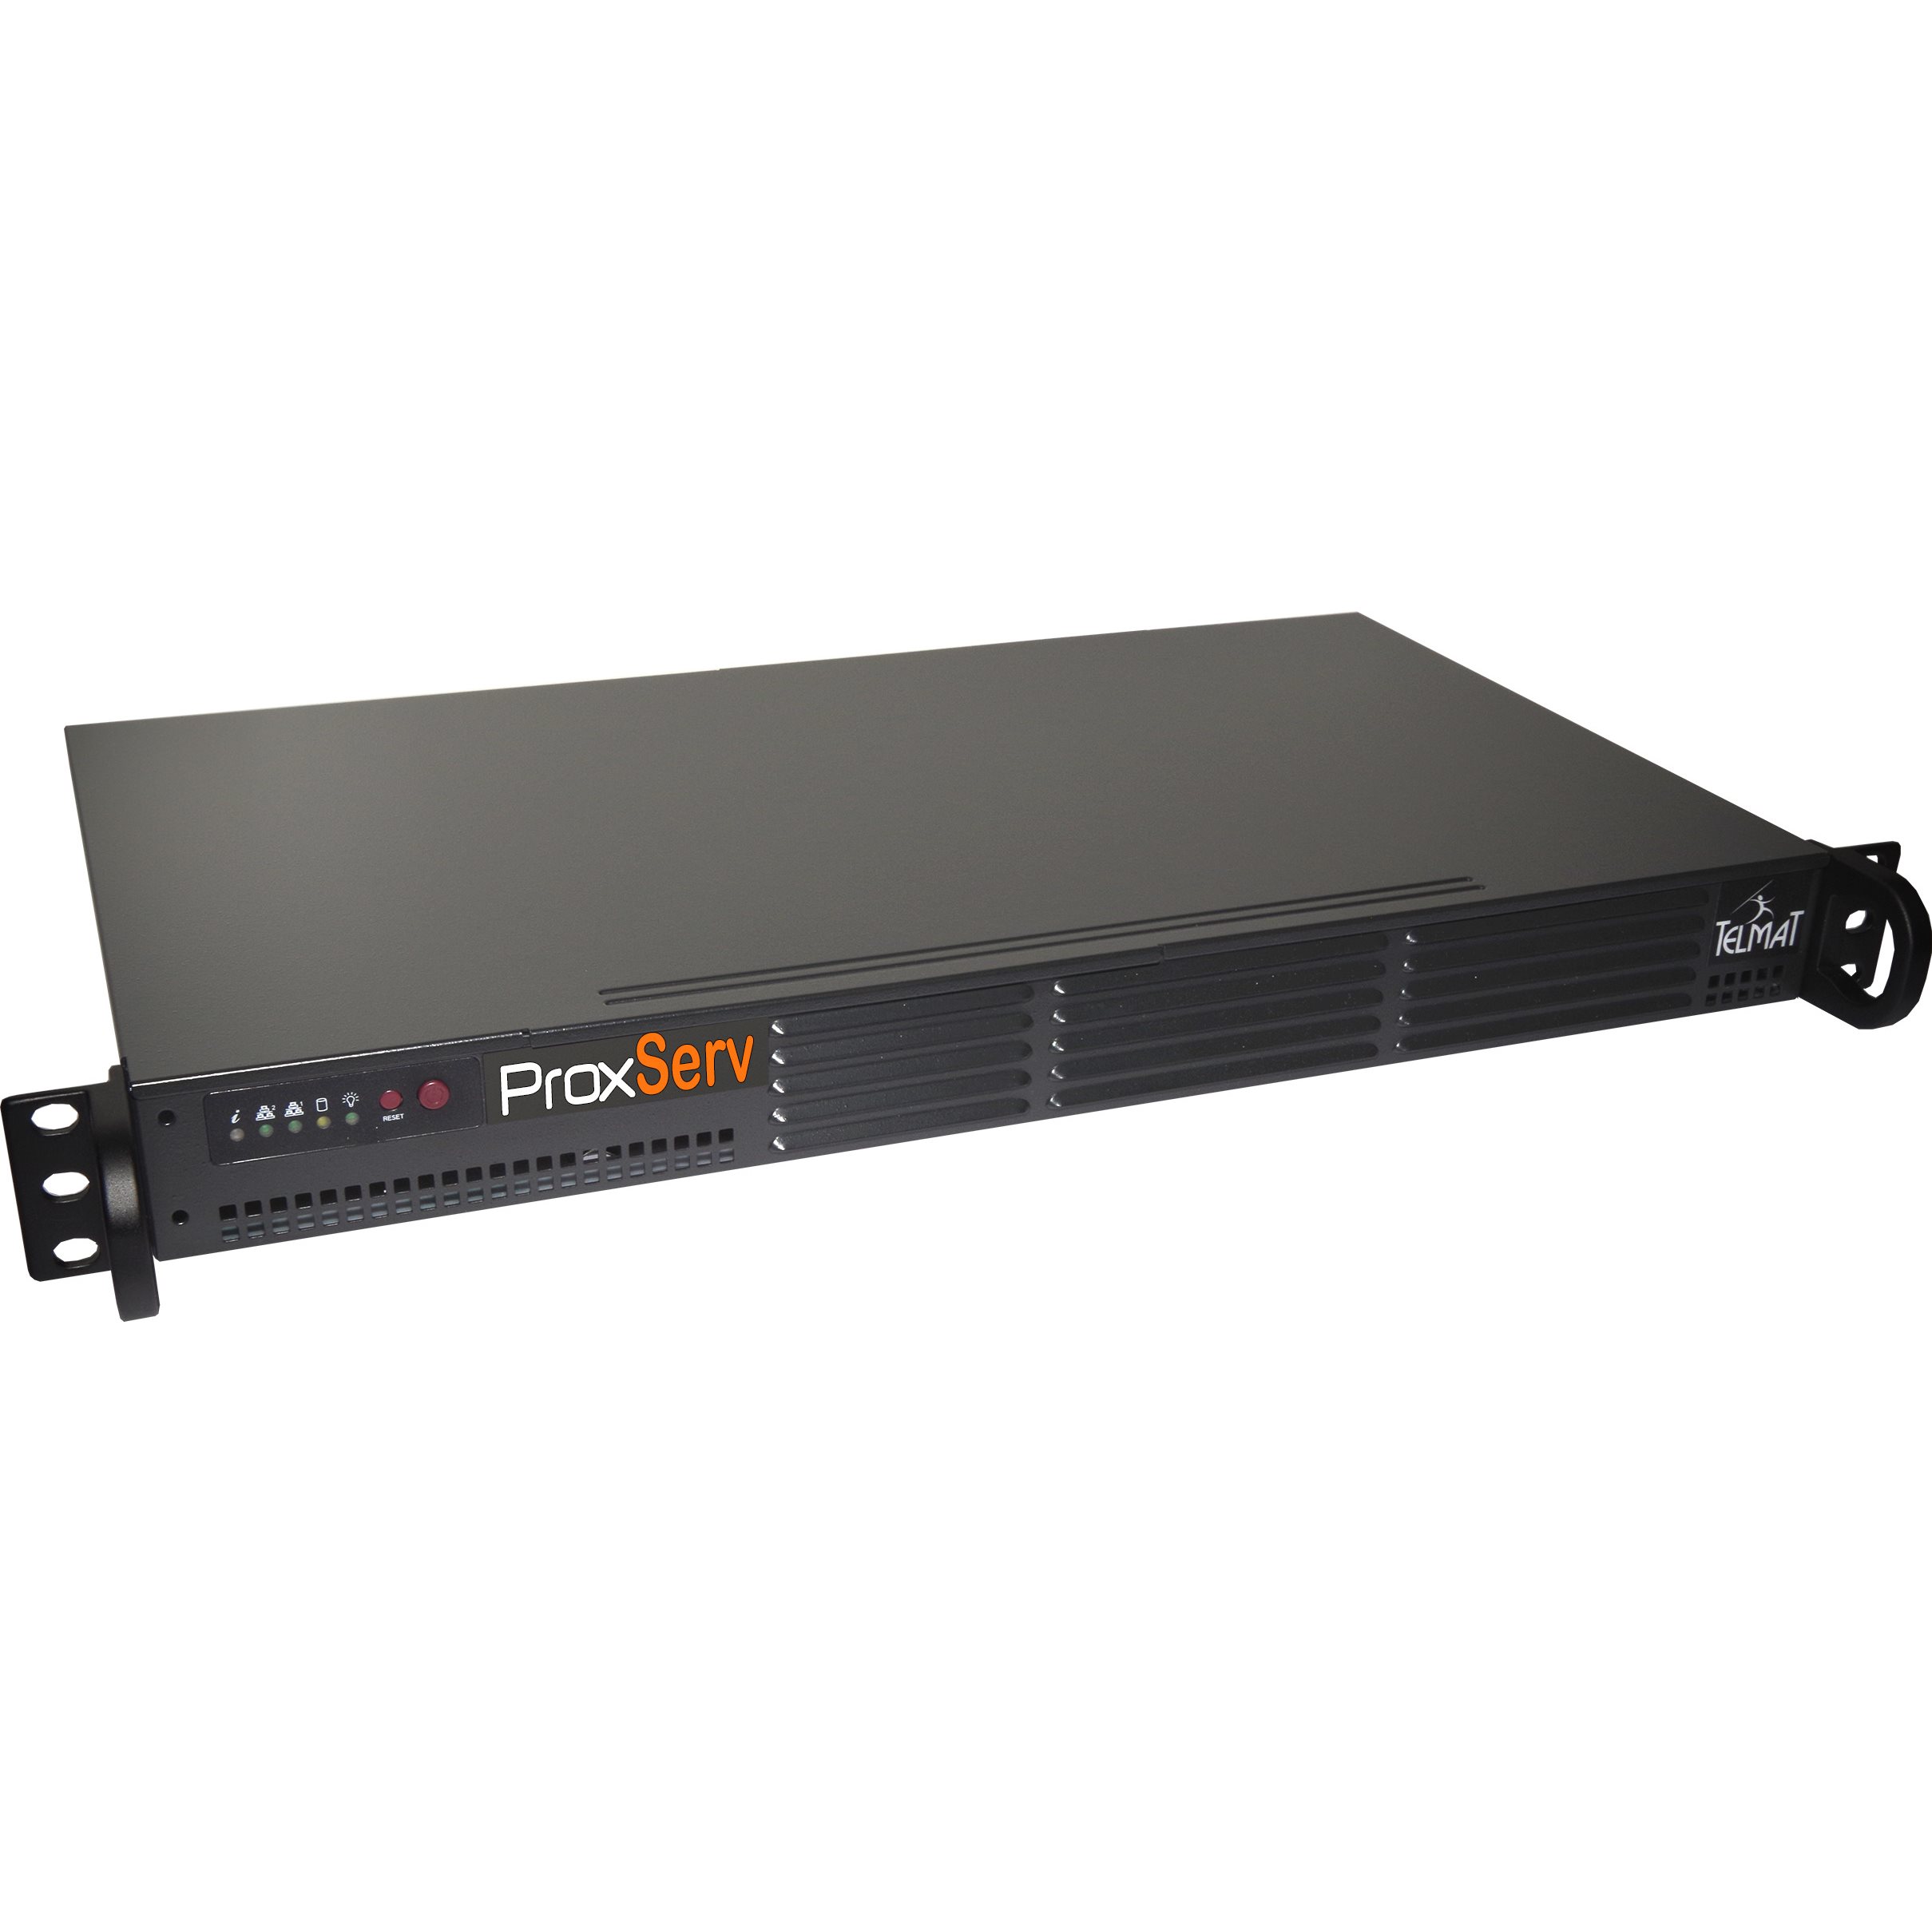   Controleur HotSpot Trace Lgale   ProxServ 1000 mdias, rack 1U 3 Ethernet Giga PSV1000RCK